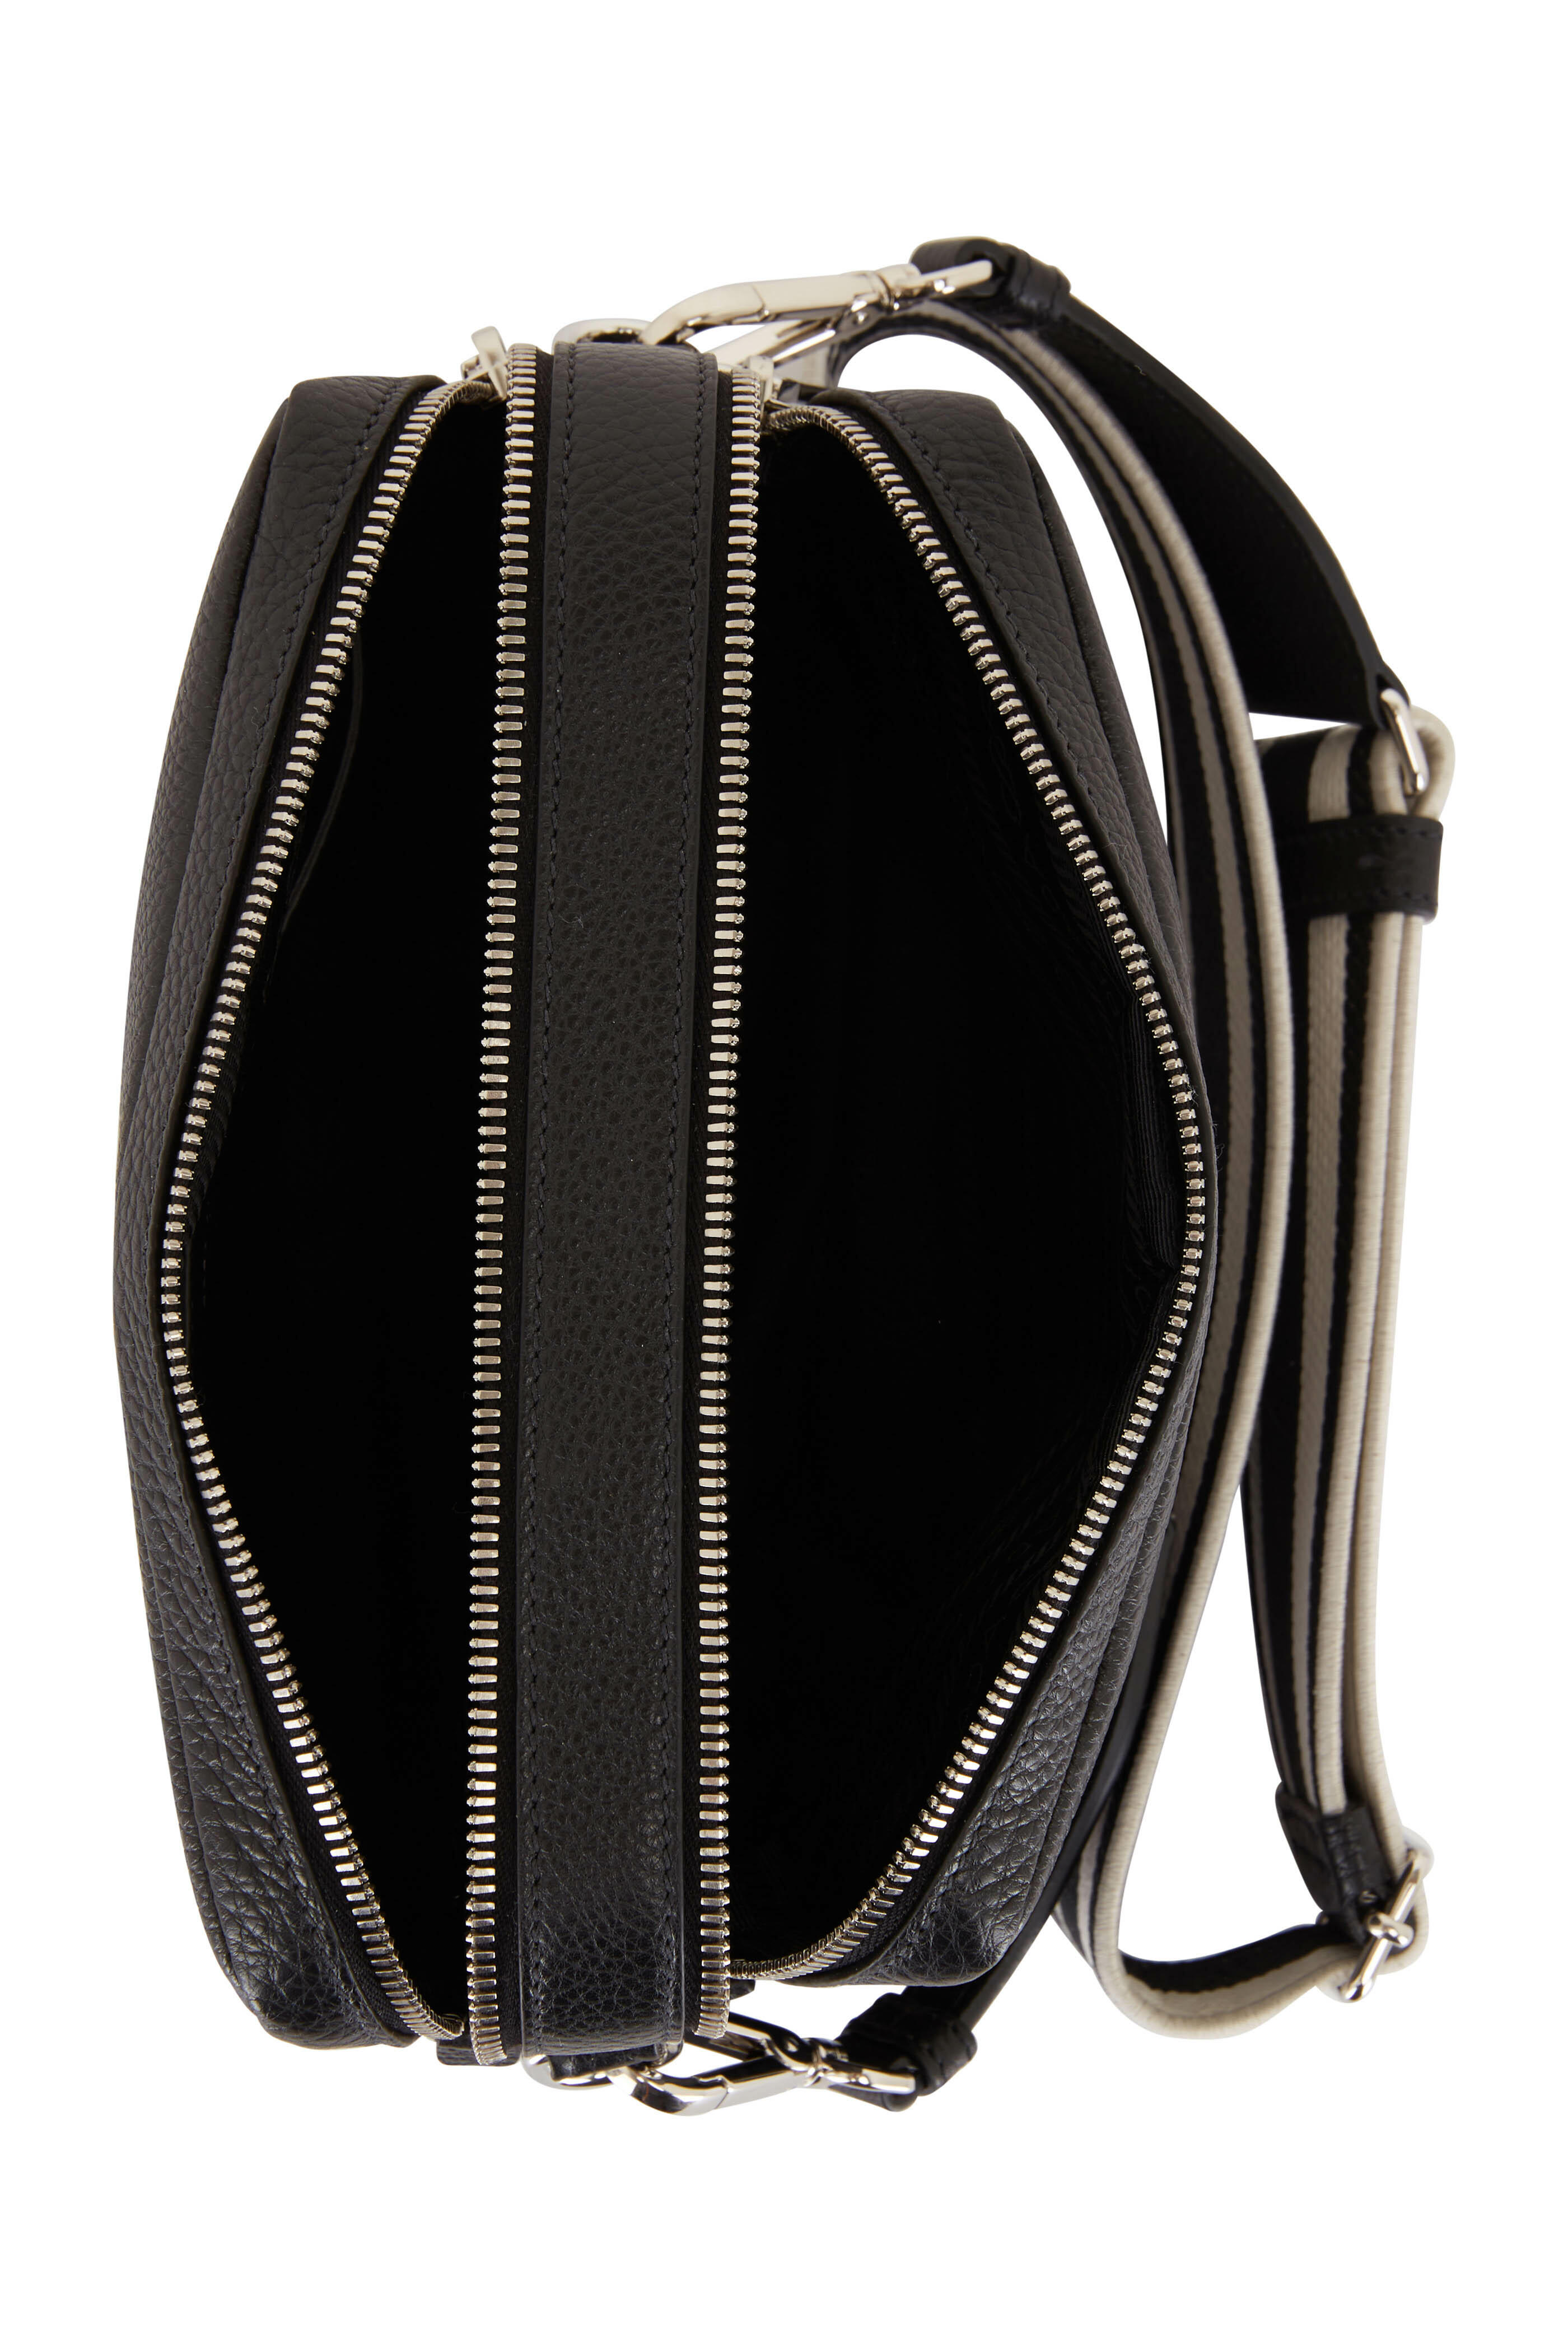 Prada Vitello Daino Pebbled Leather Zip Shoulder Bag